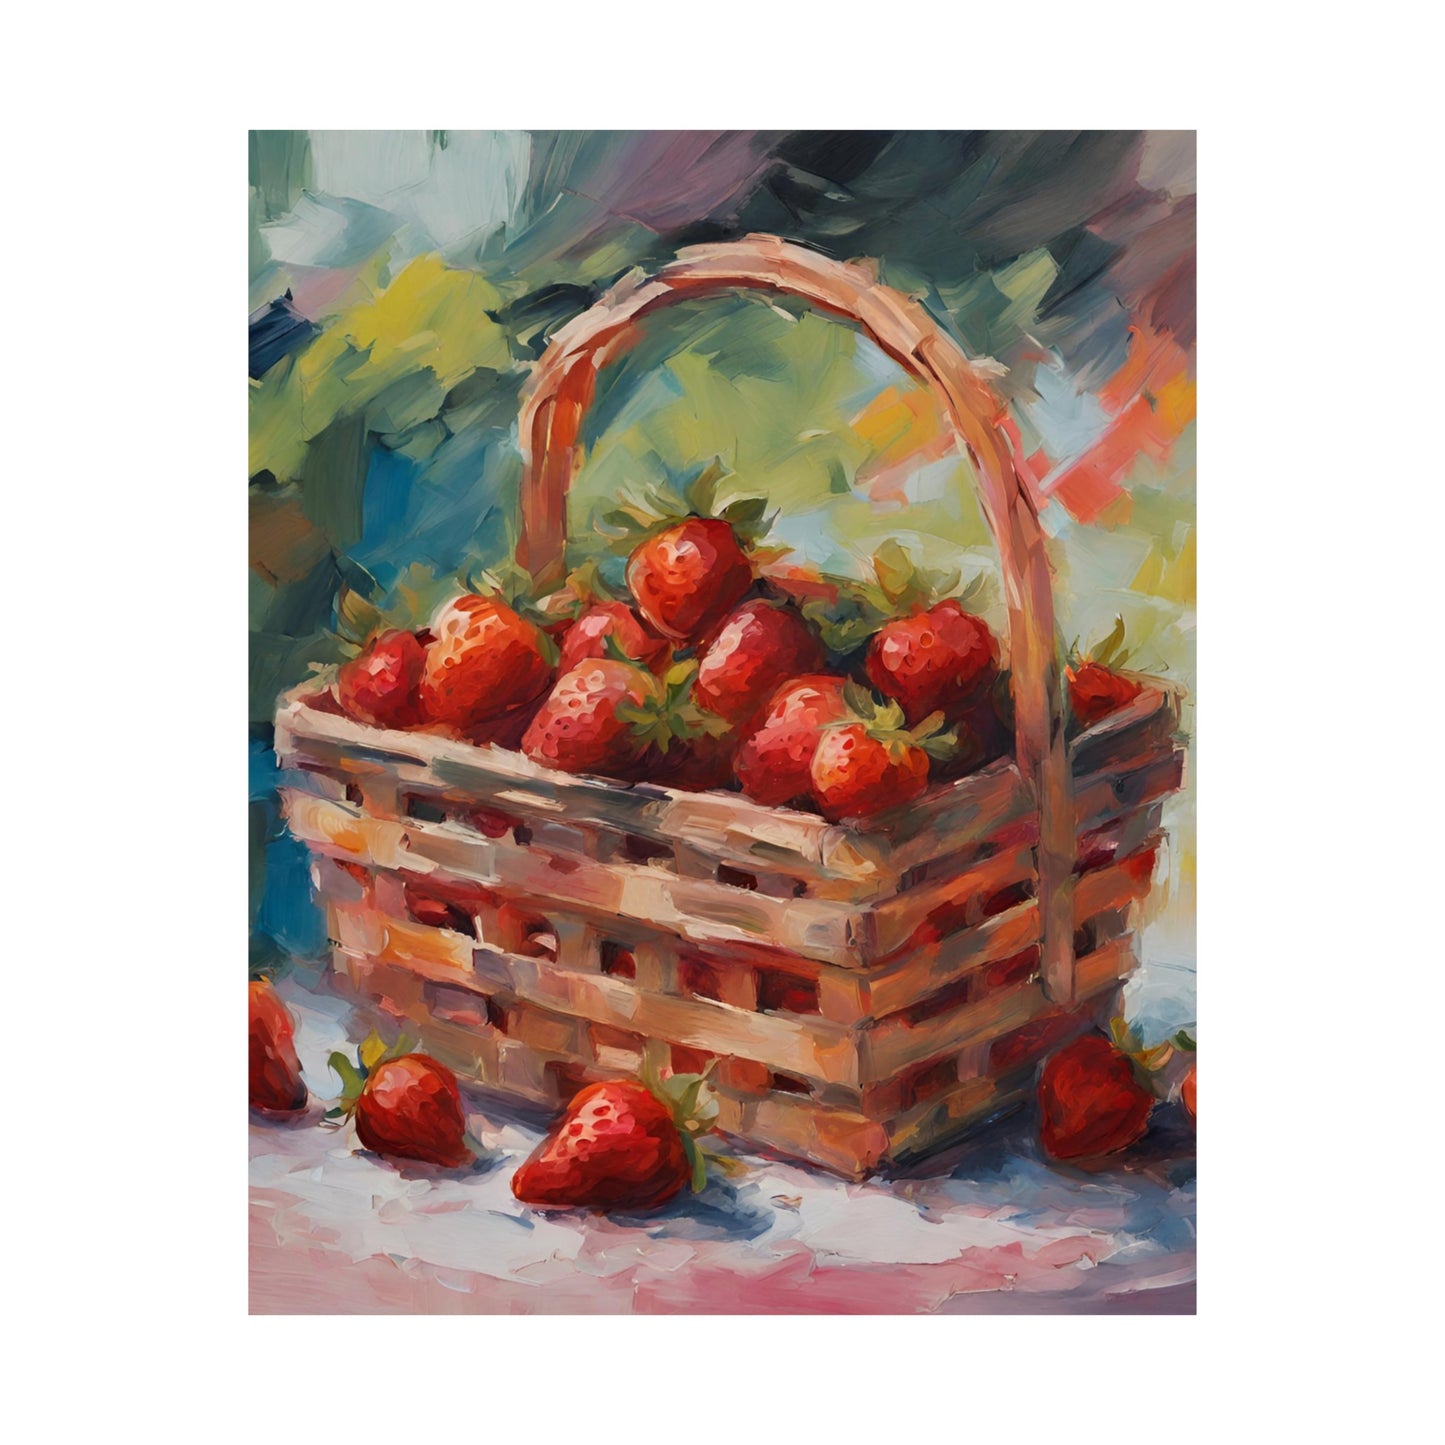 Posters - Farmer's Market Strawberries